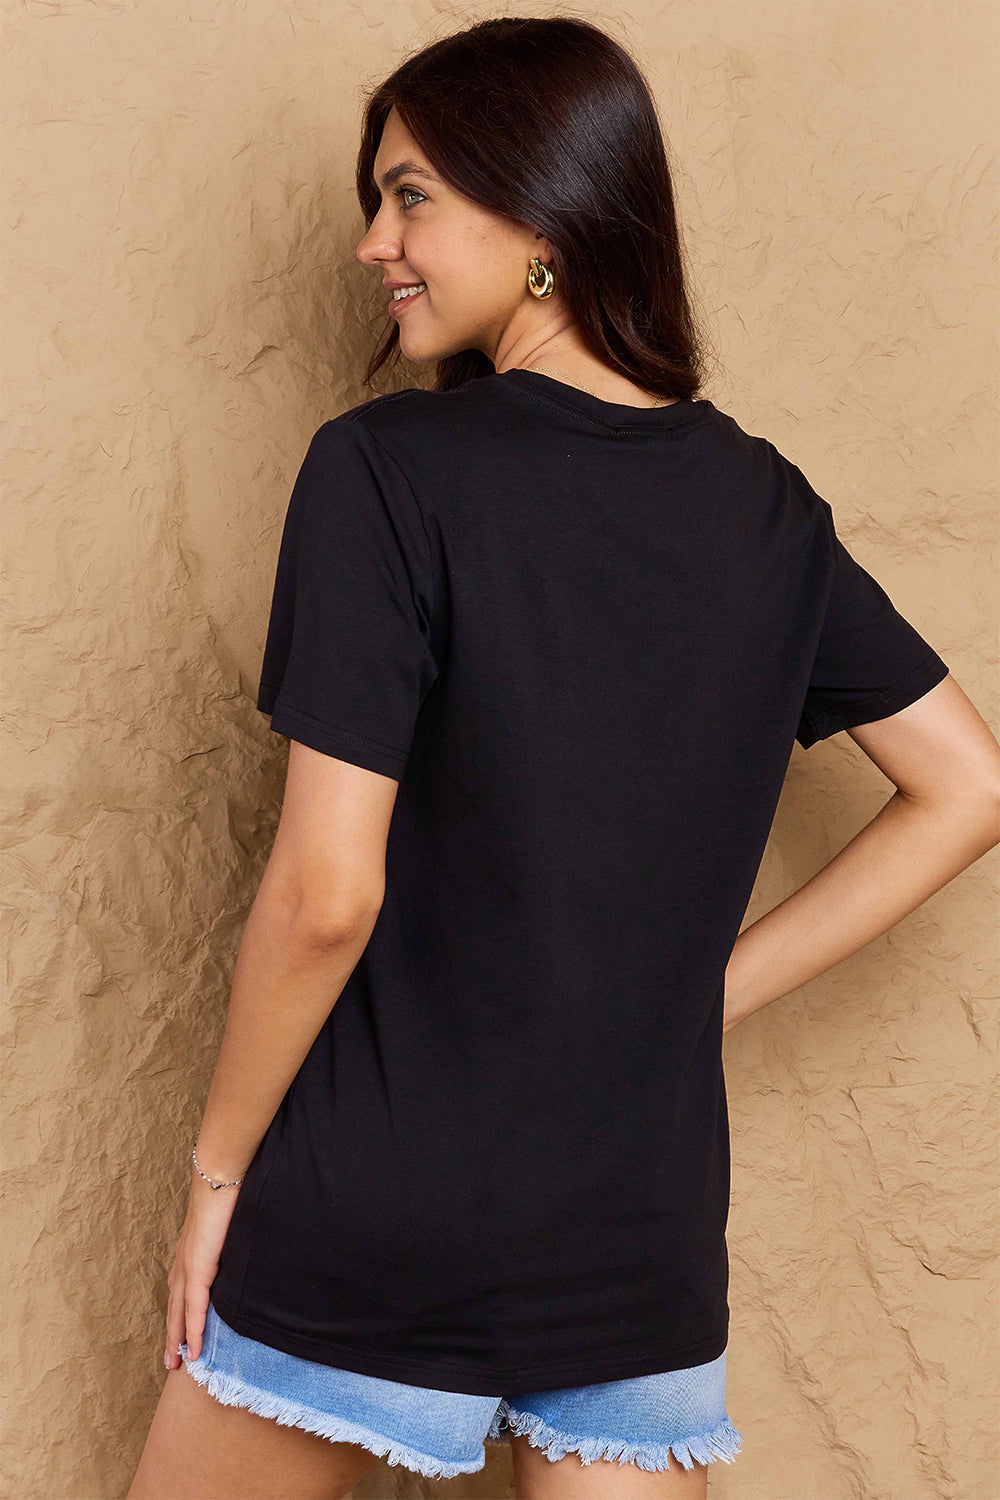 Rosy Brown Simply Love Full Size CAPRICORNUS Graphic T-Shirt